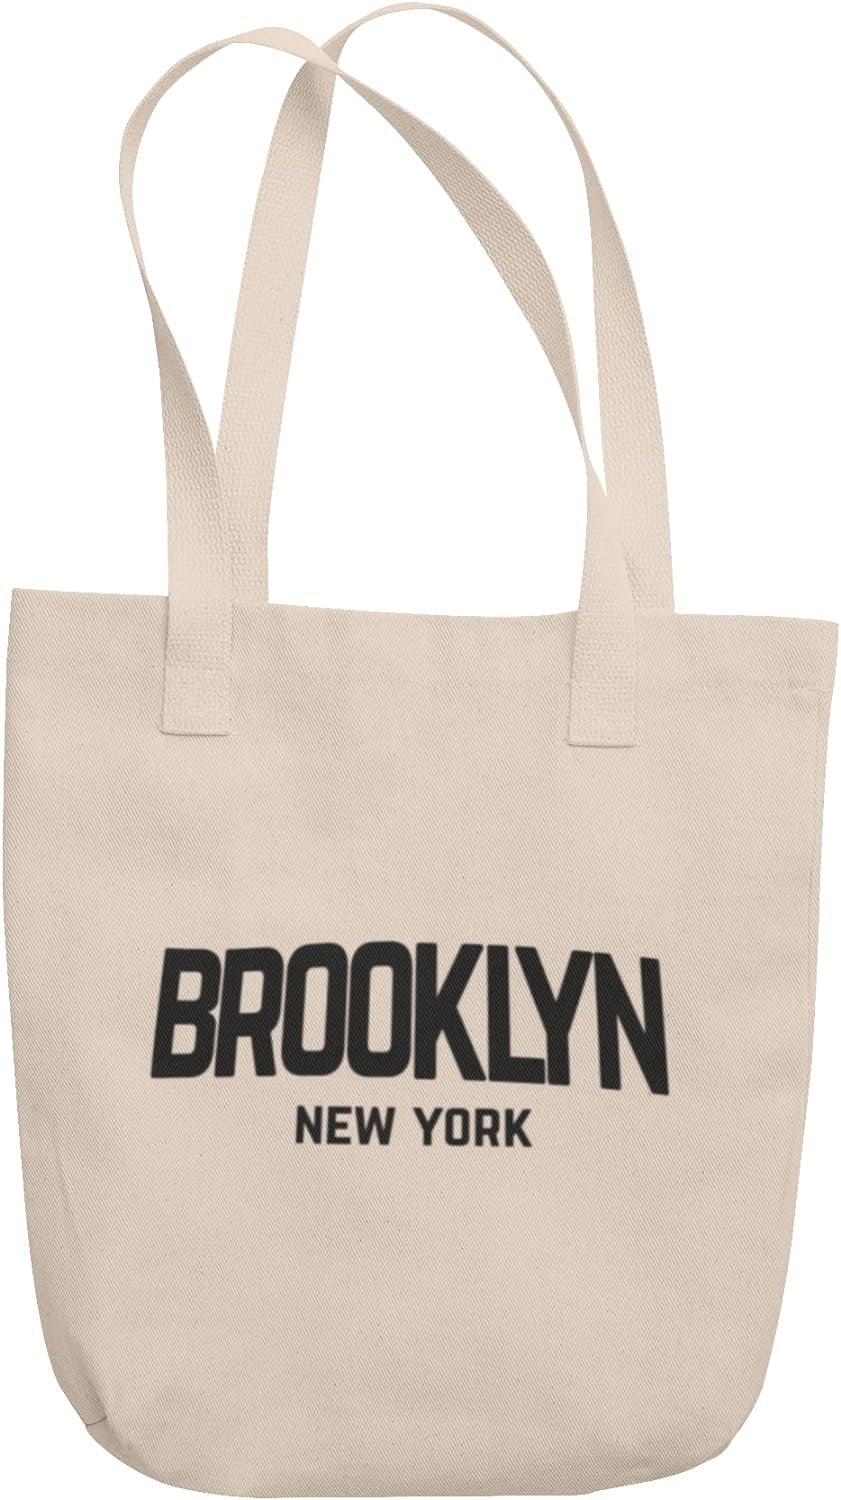 Brooklyn - Simple Tote Bag - Vintage Style Retro New York City Cotton Canvas